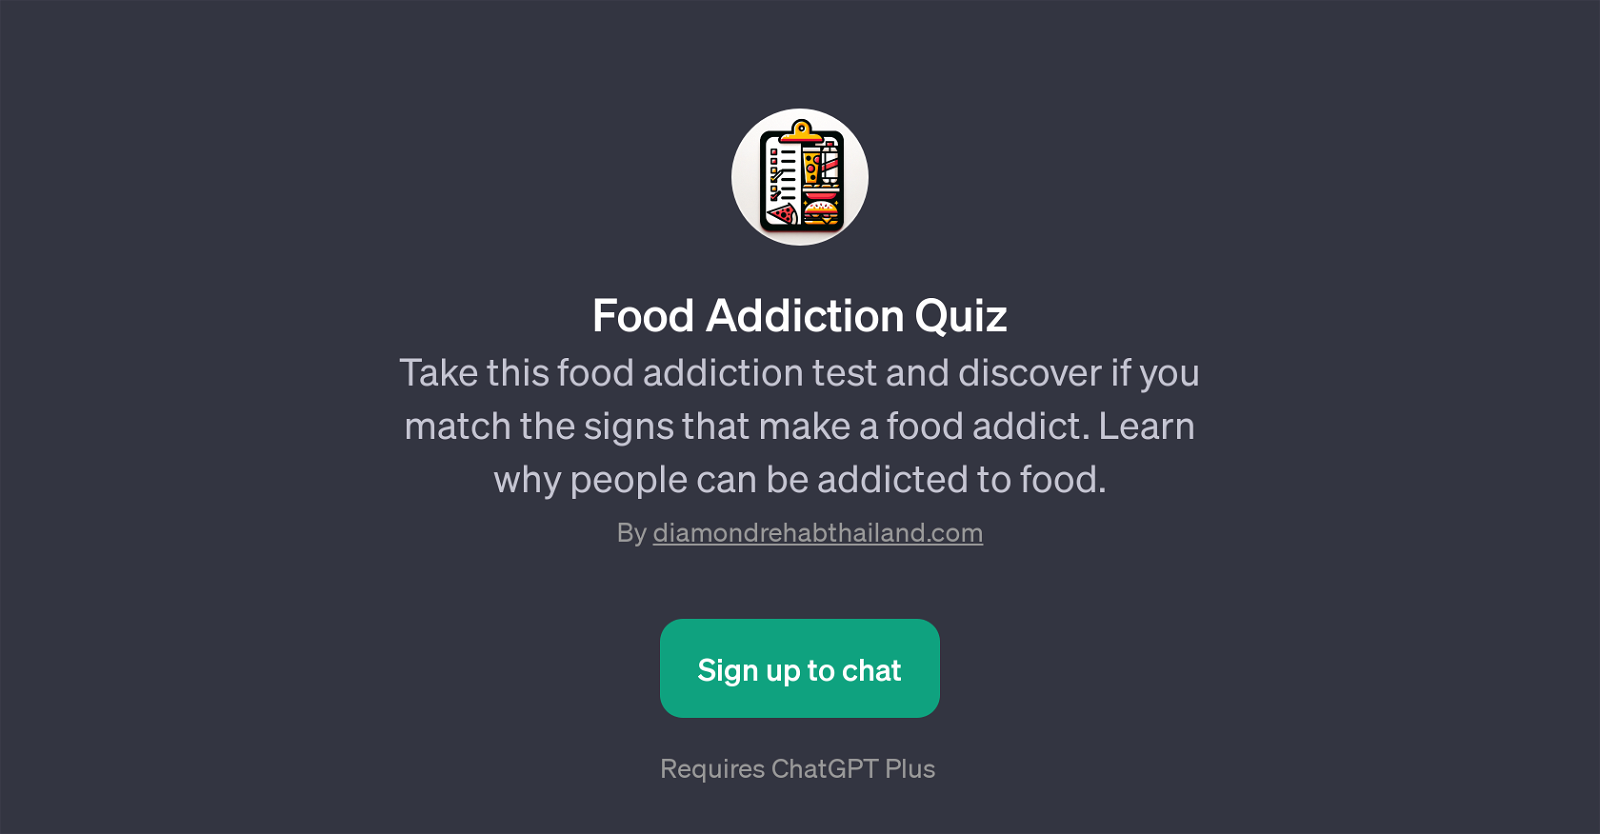 Food Addiction Quiz website